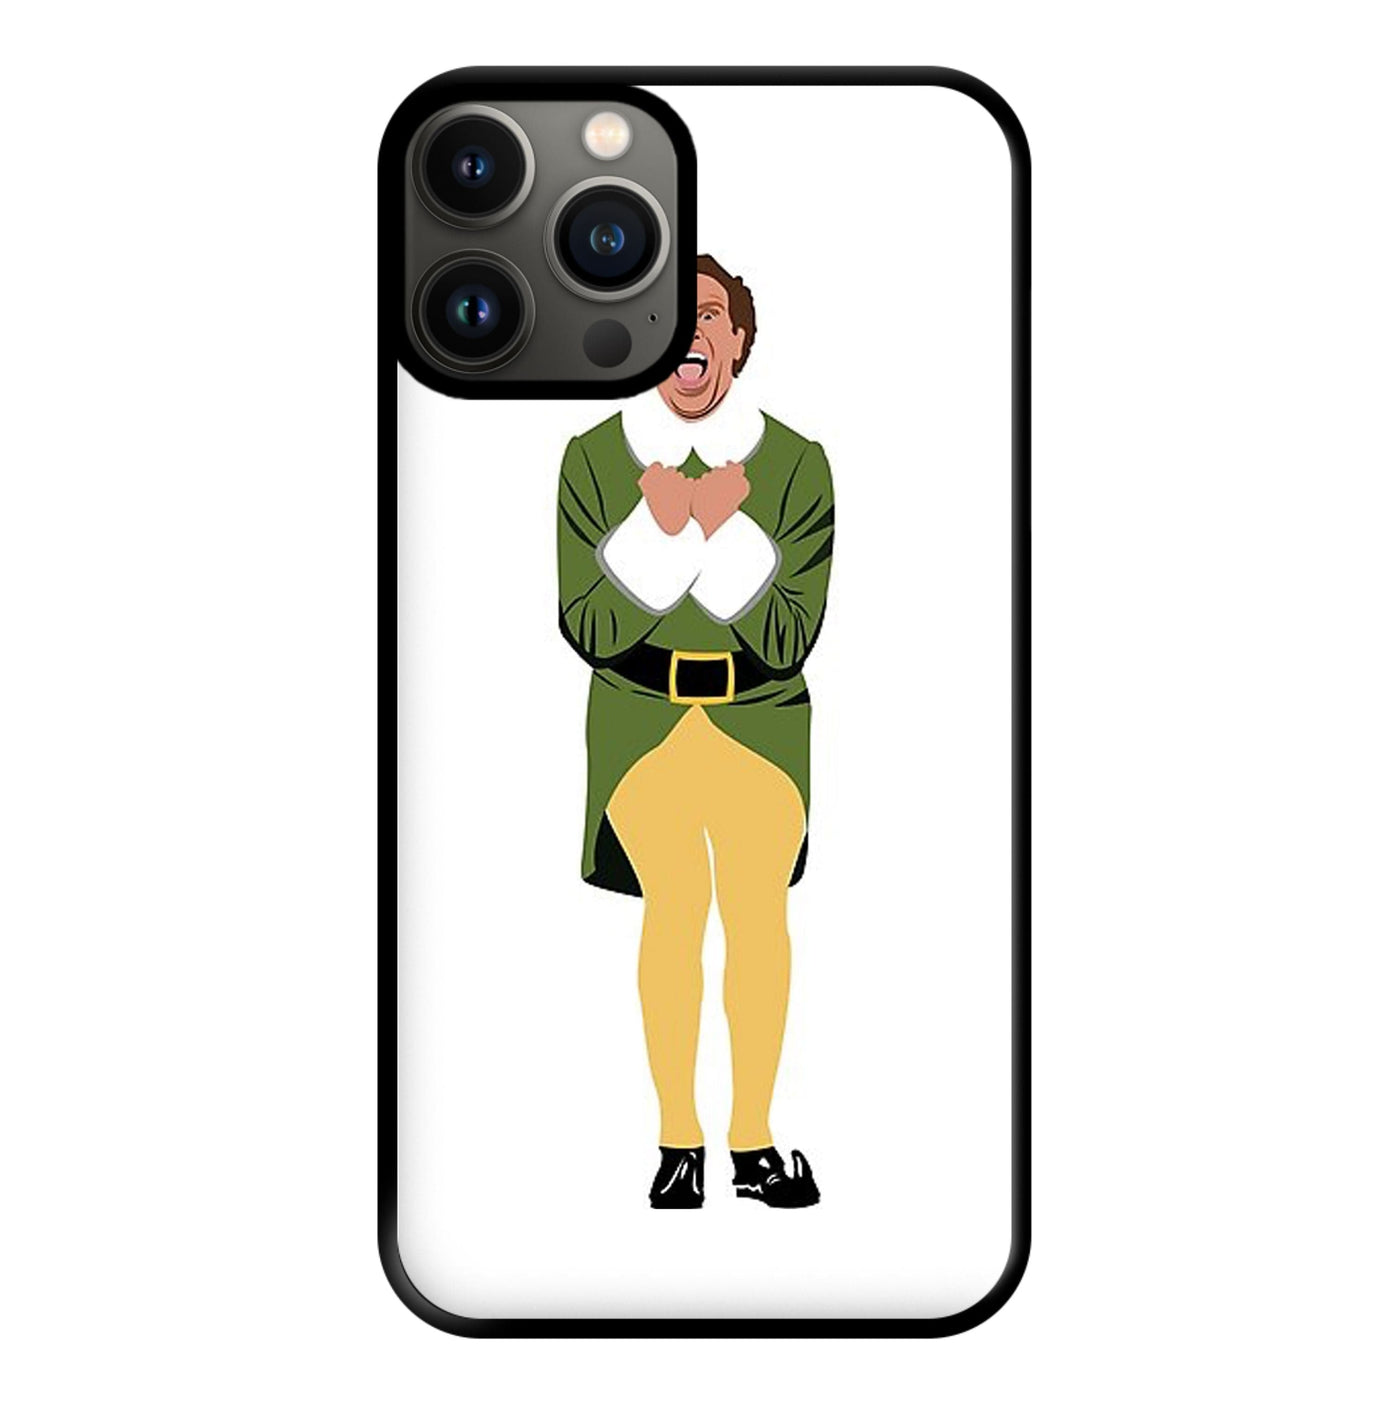 YAY - Buddy The Elf Phone Case